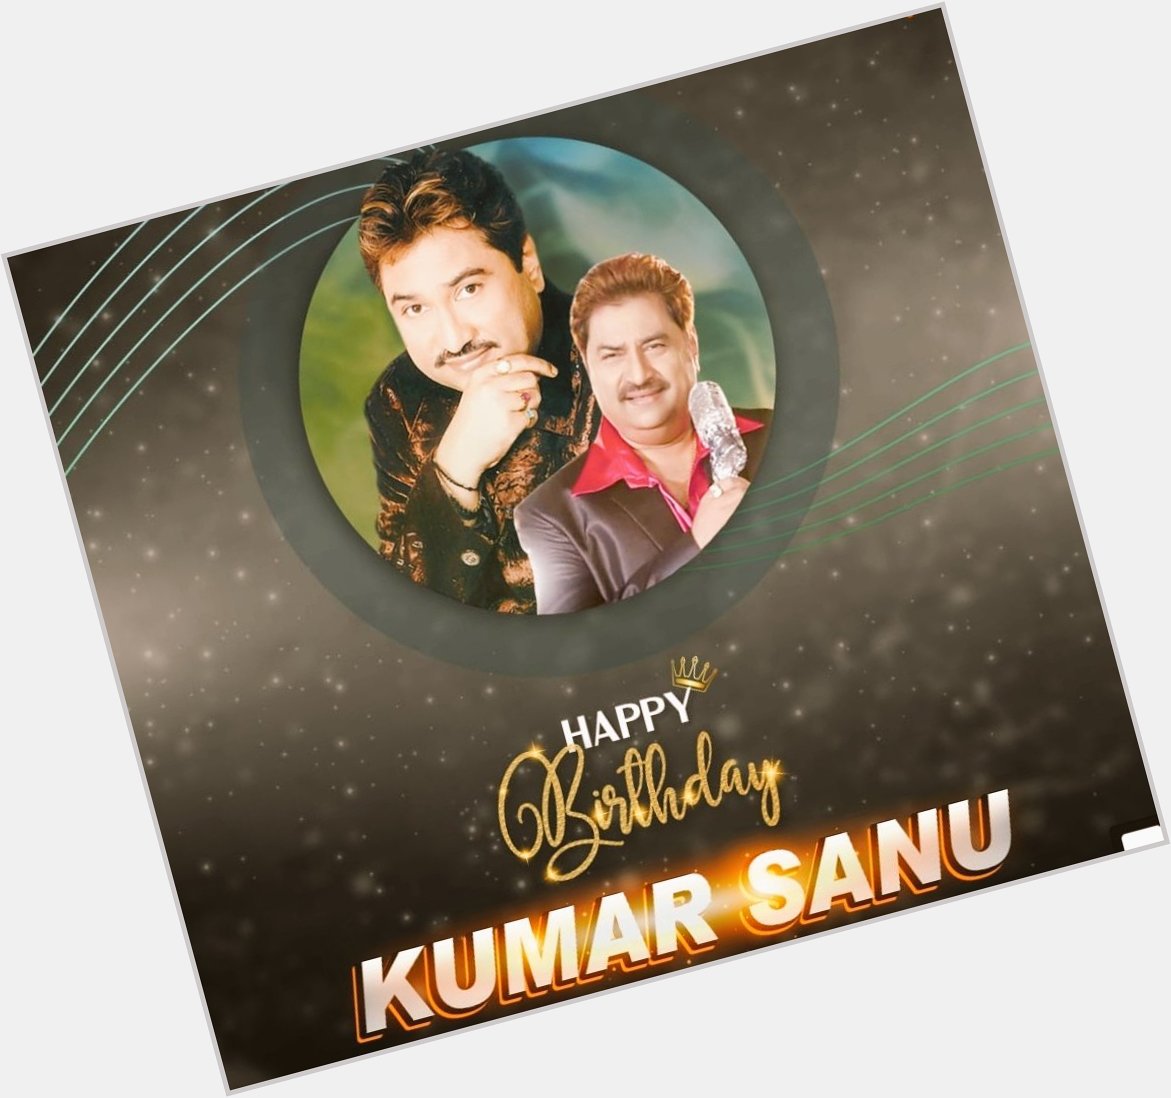 Happy birthday Kumar sanu   series singer 